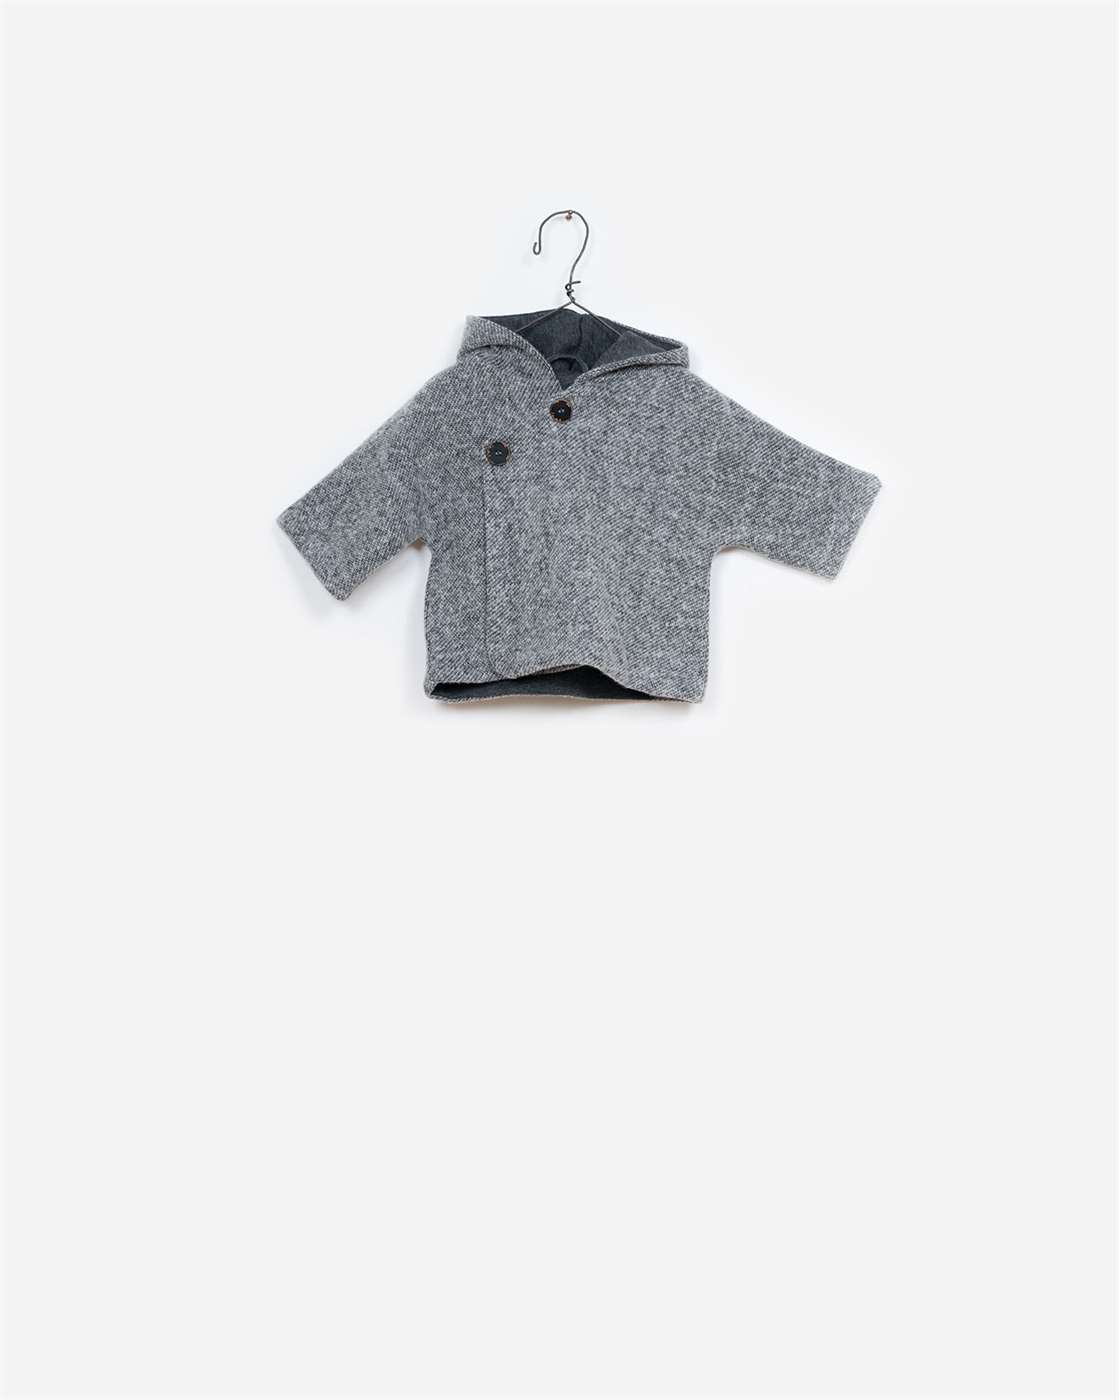 BeeBoo|BeeBoo PlayUp vêtements bébé baby clothes manteau Felpa coat gris grey